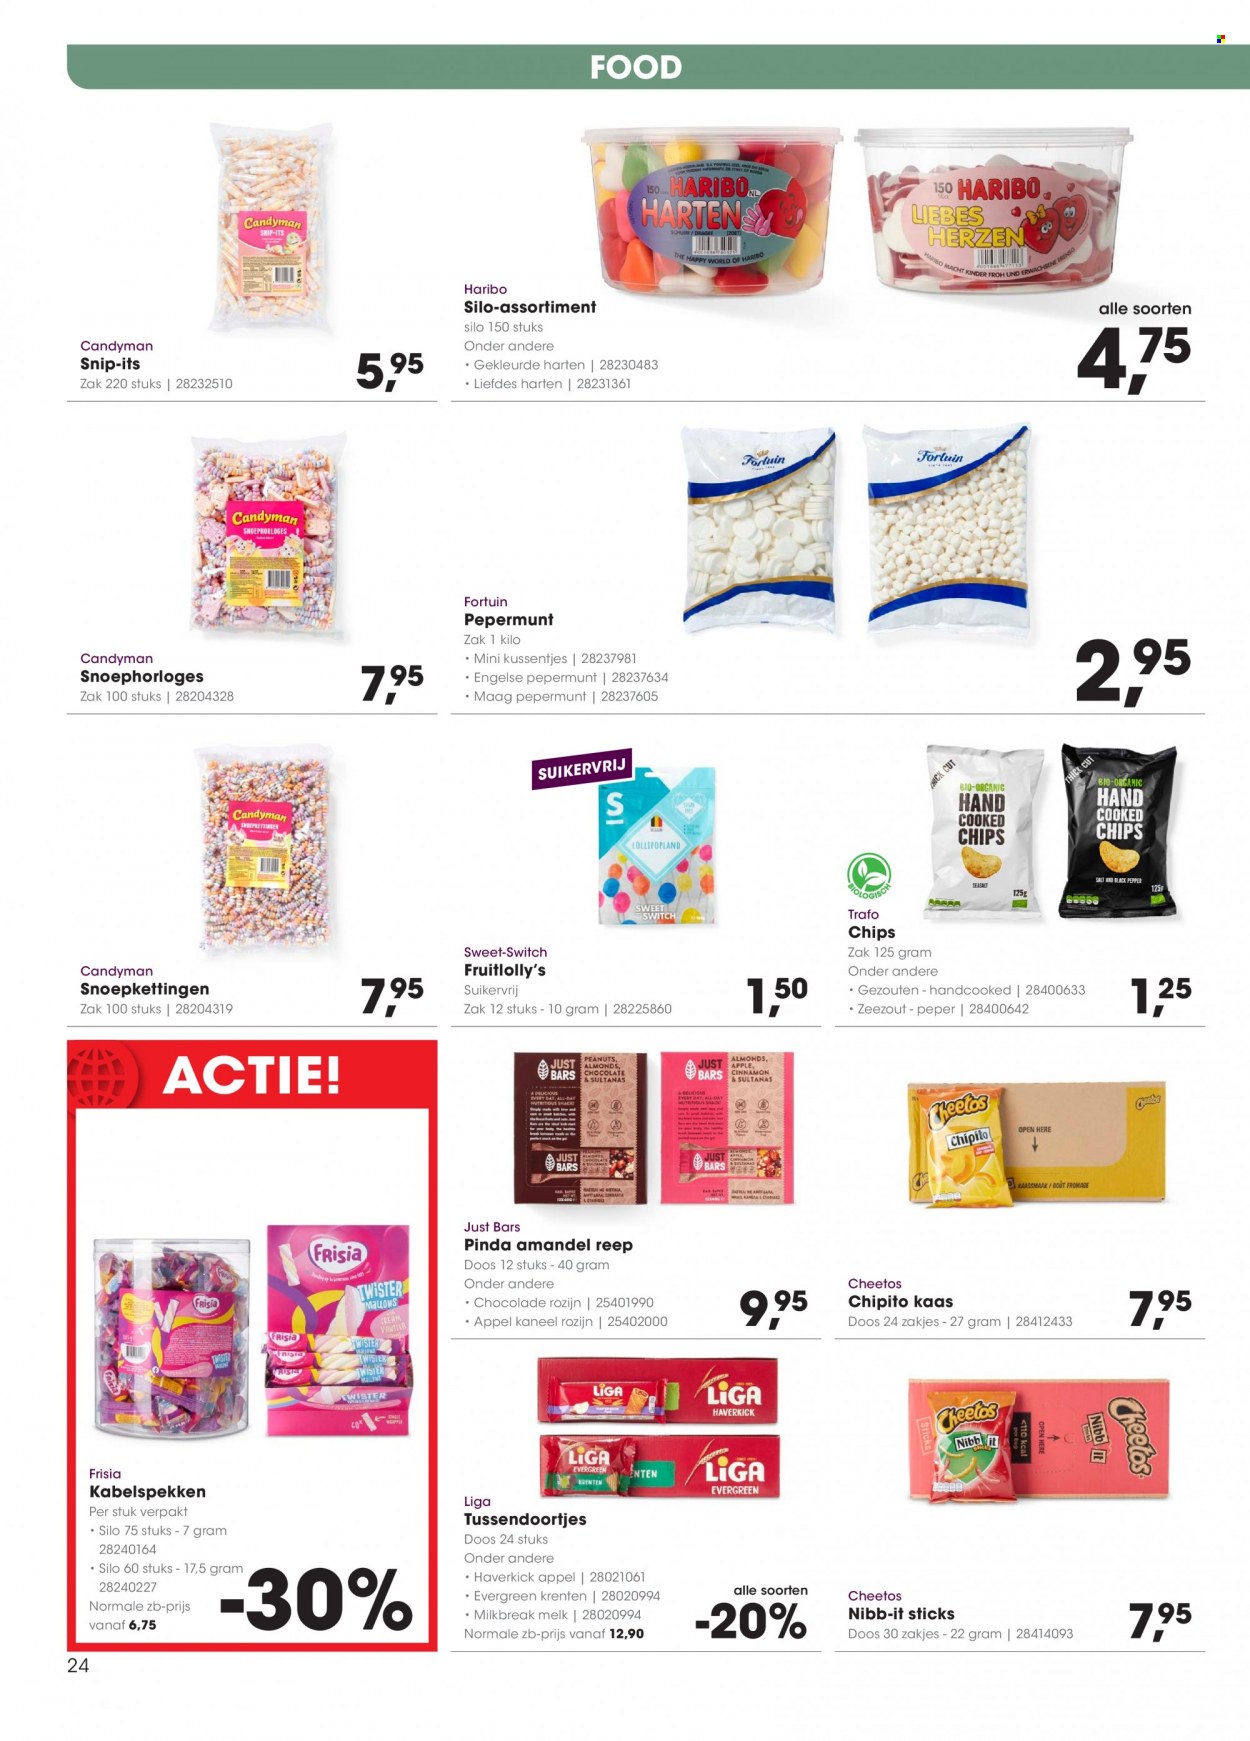 thumbnail - Hanos-aanbieding - 24-1-2022 - 6-2-2022 -  producten in de aanbieding - kaas, melk, chocolade, cheetos, chips, kaneel. Pagina 24.